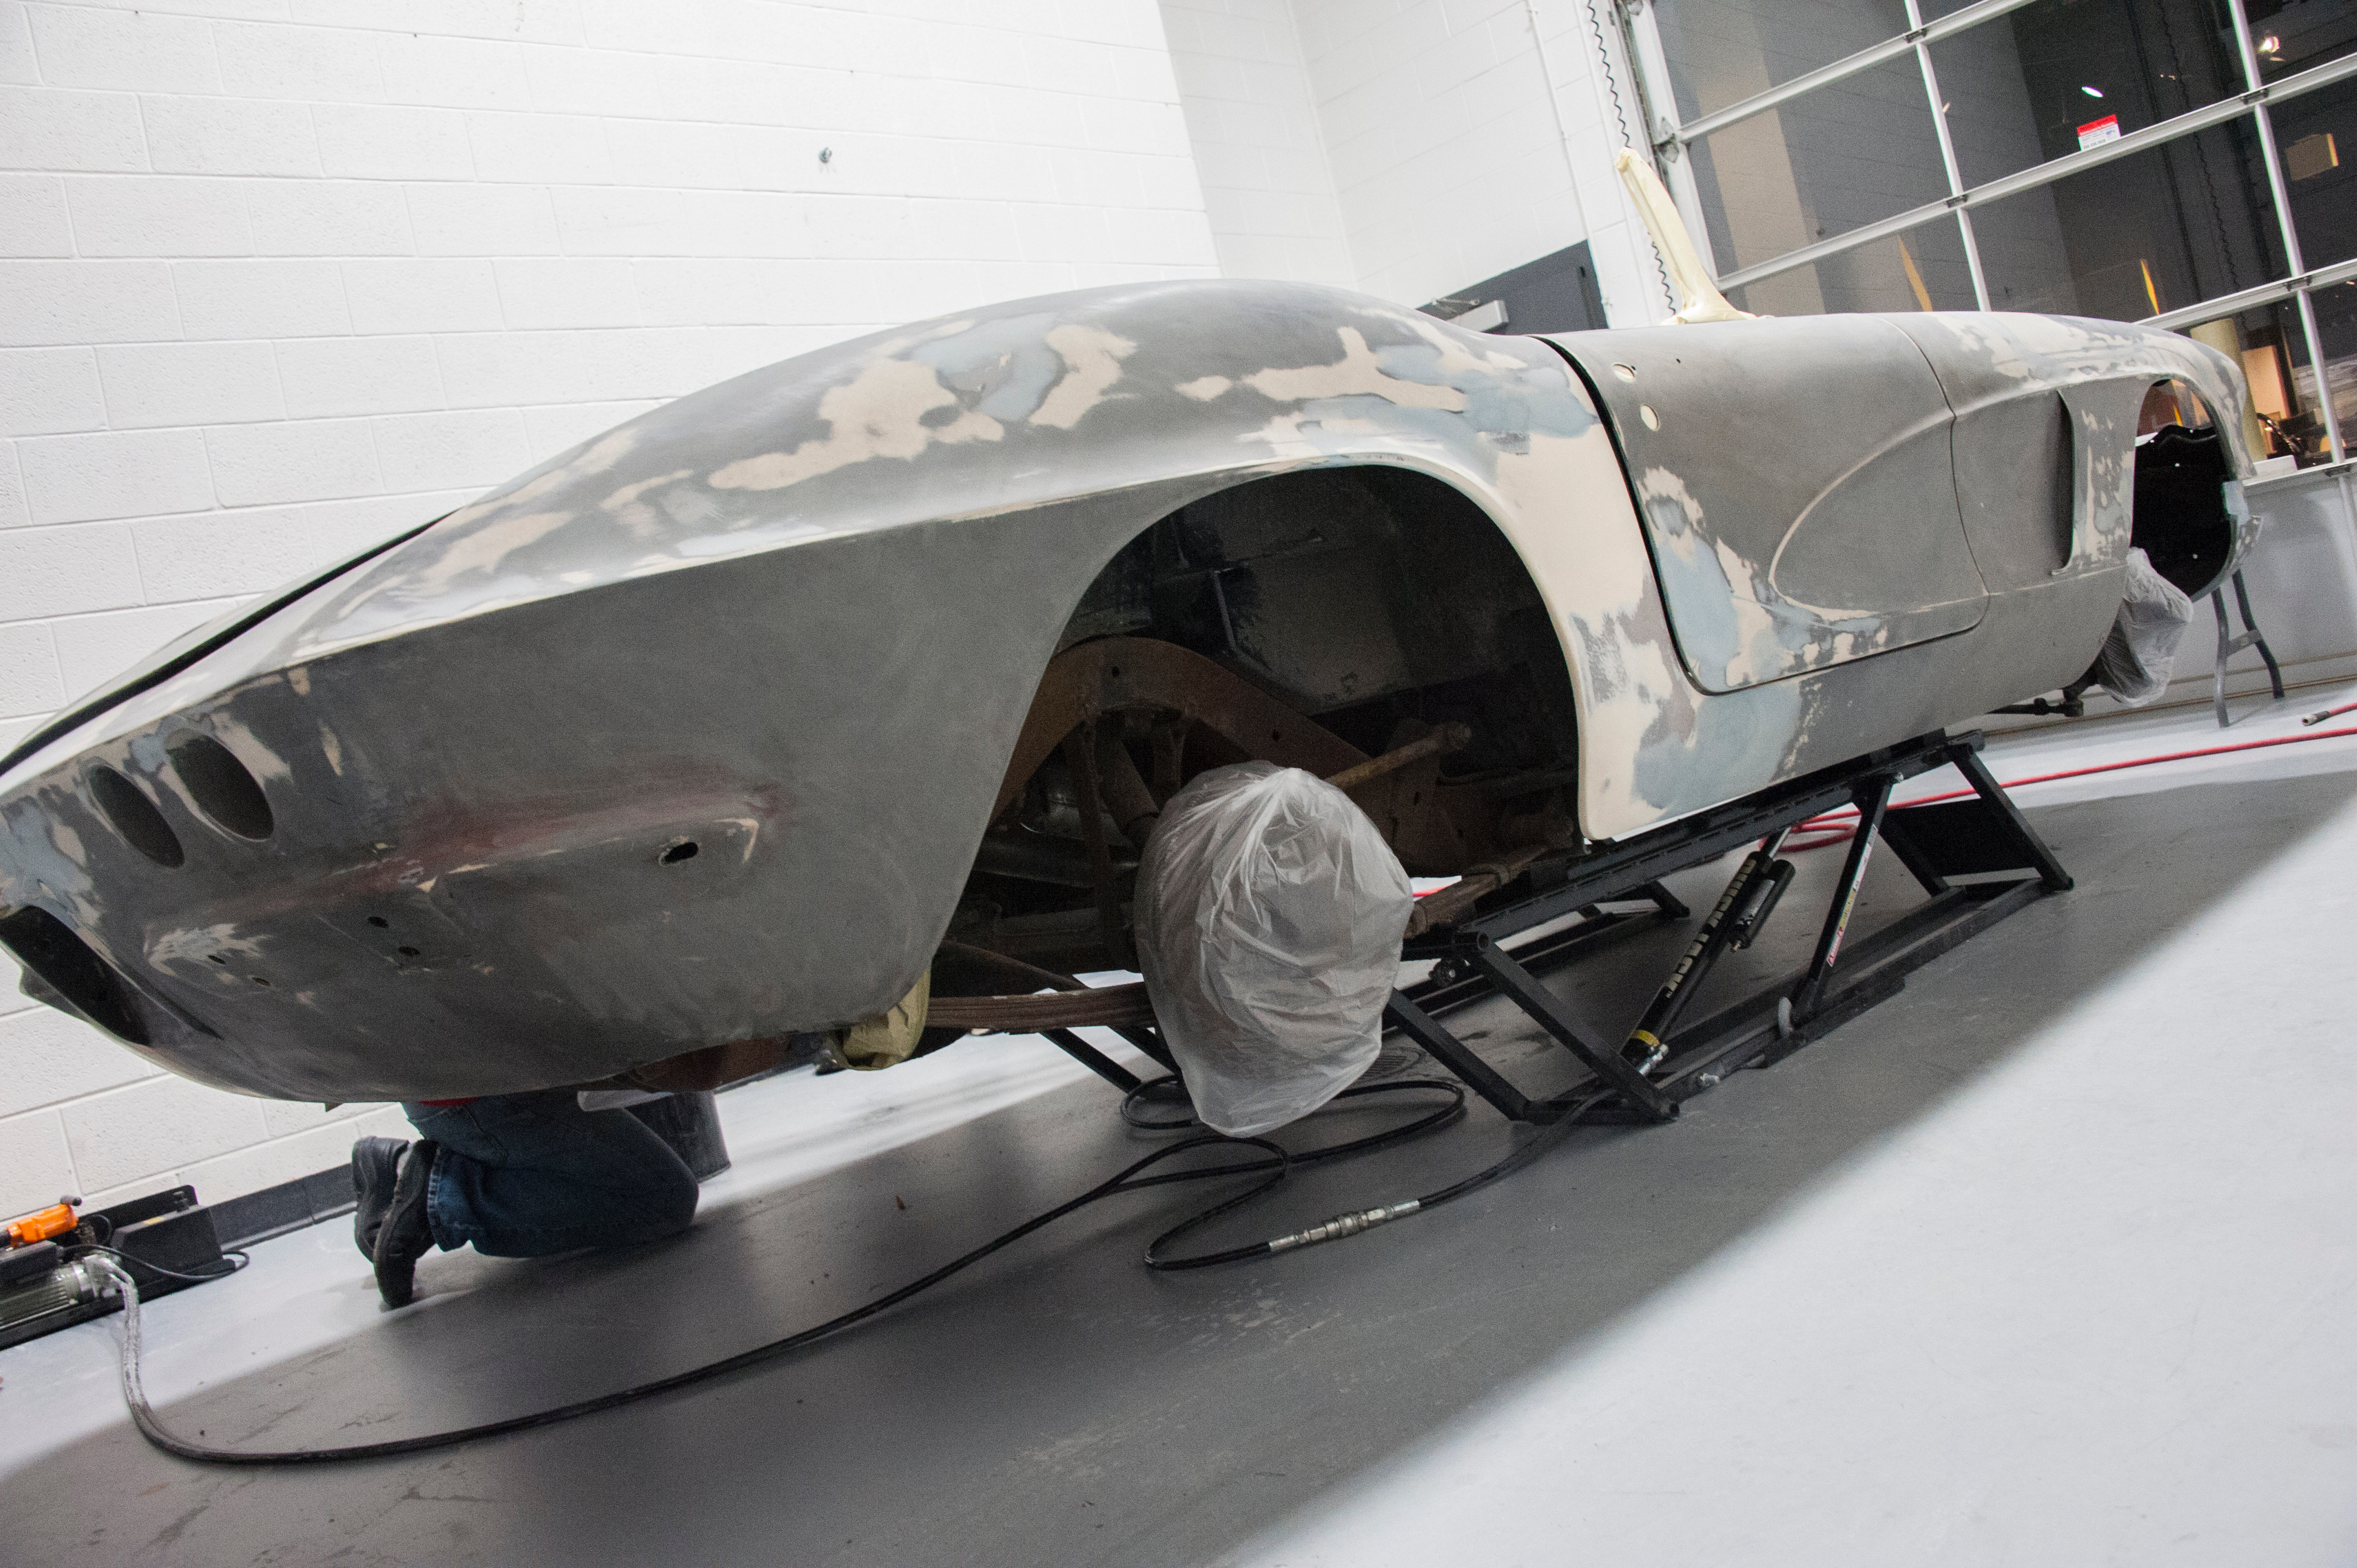 , Sinkhole survivor to be unveiled Monday at Corvette museum, ClassicCars.com Journal